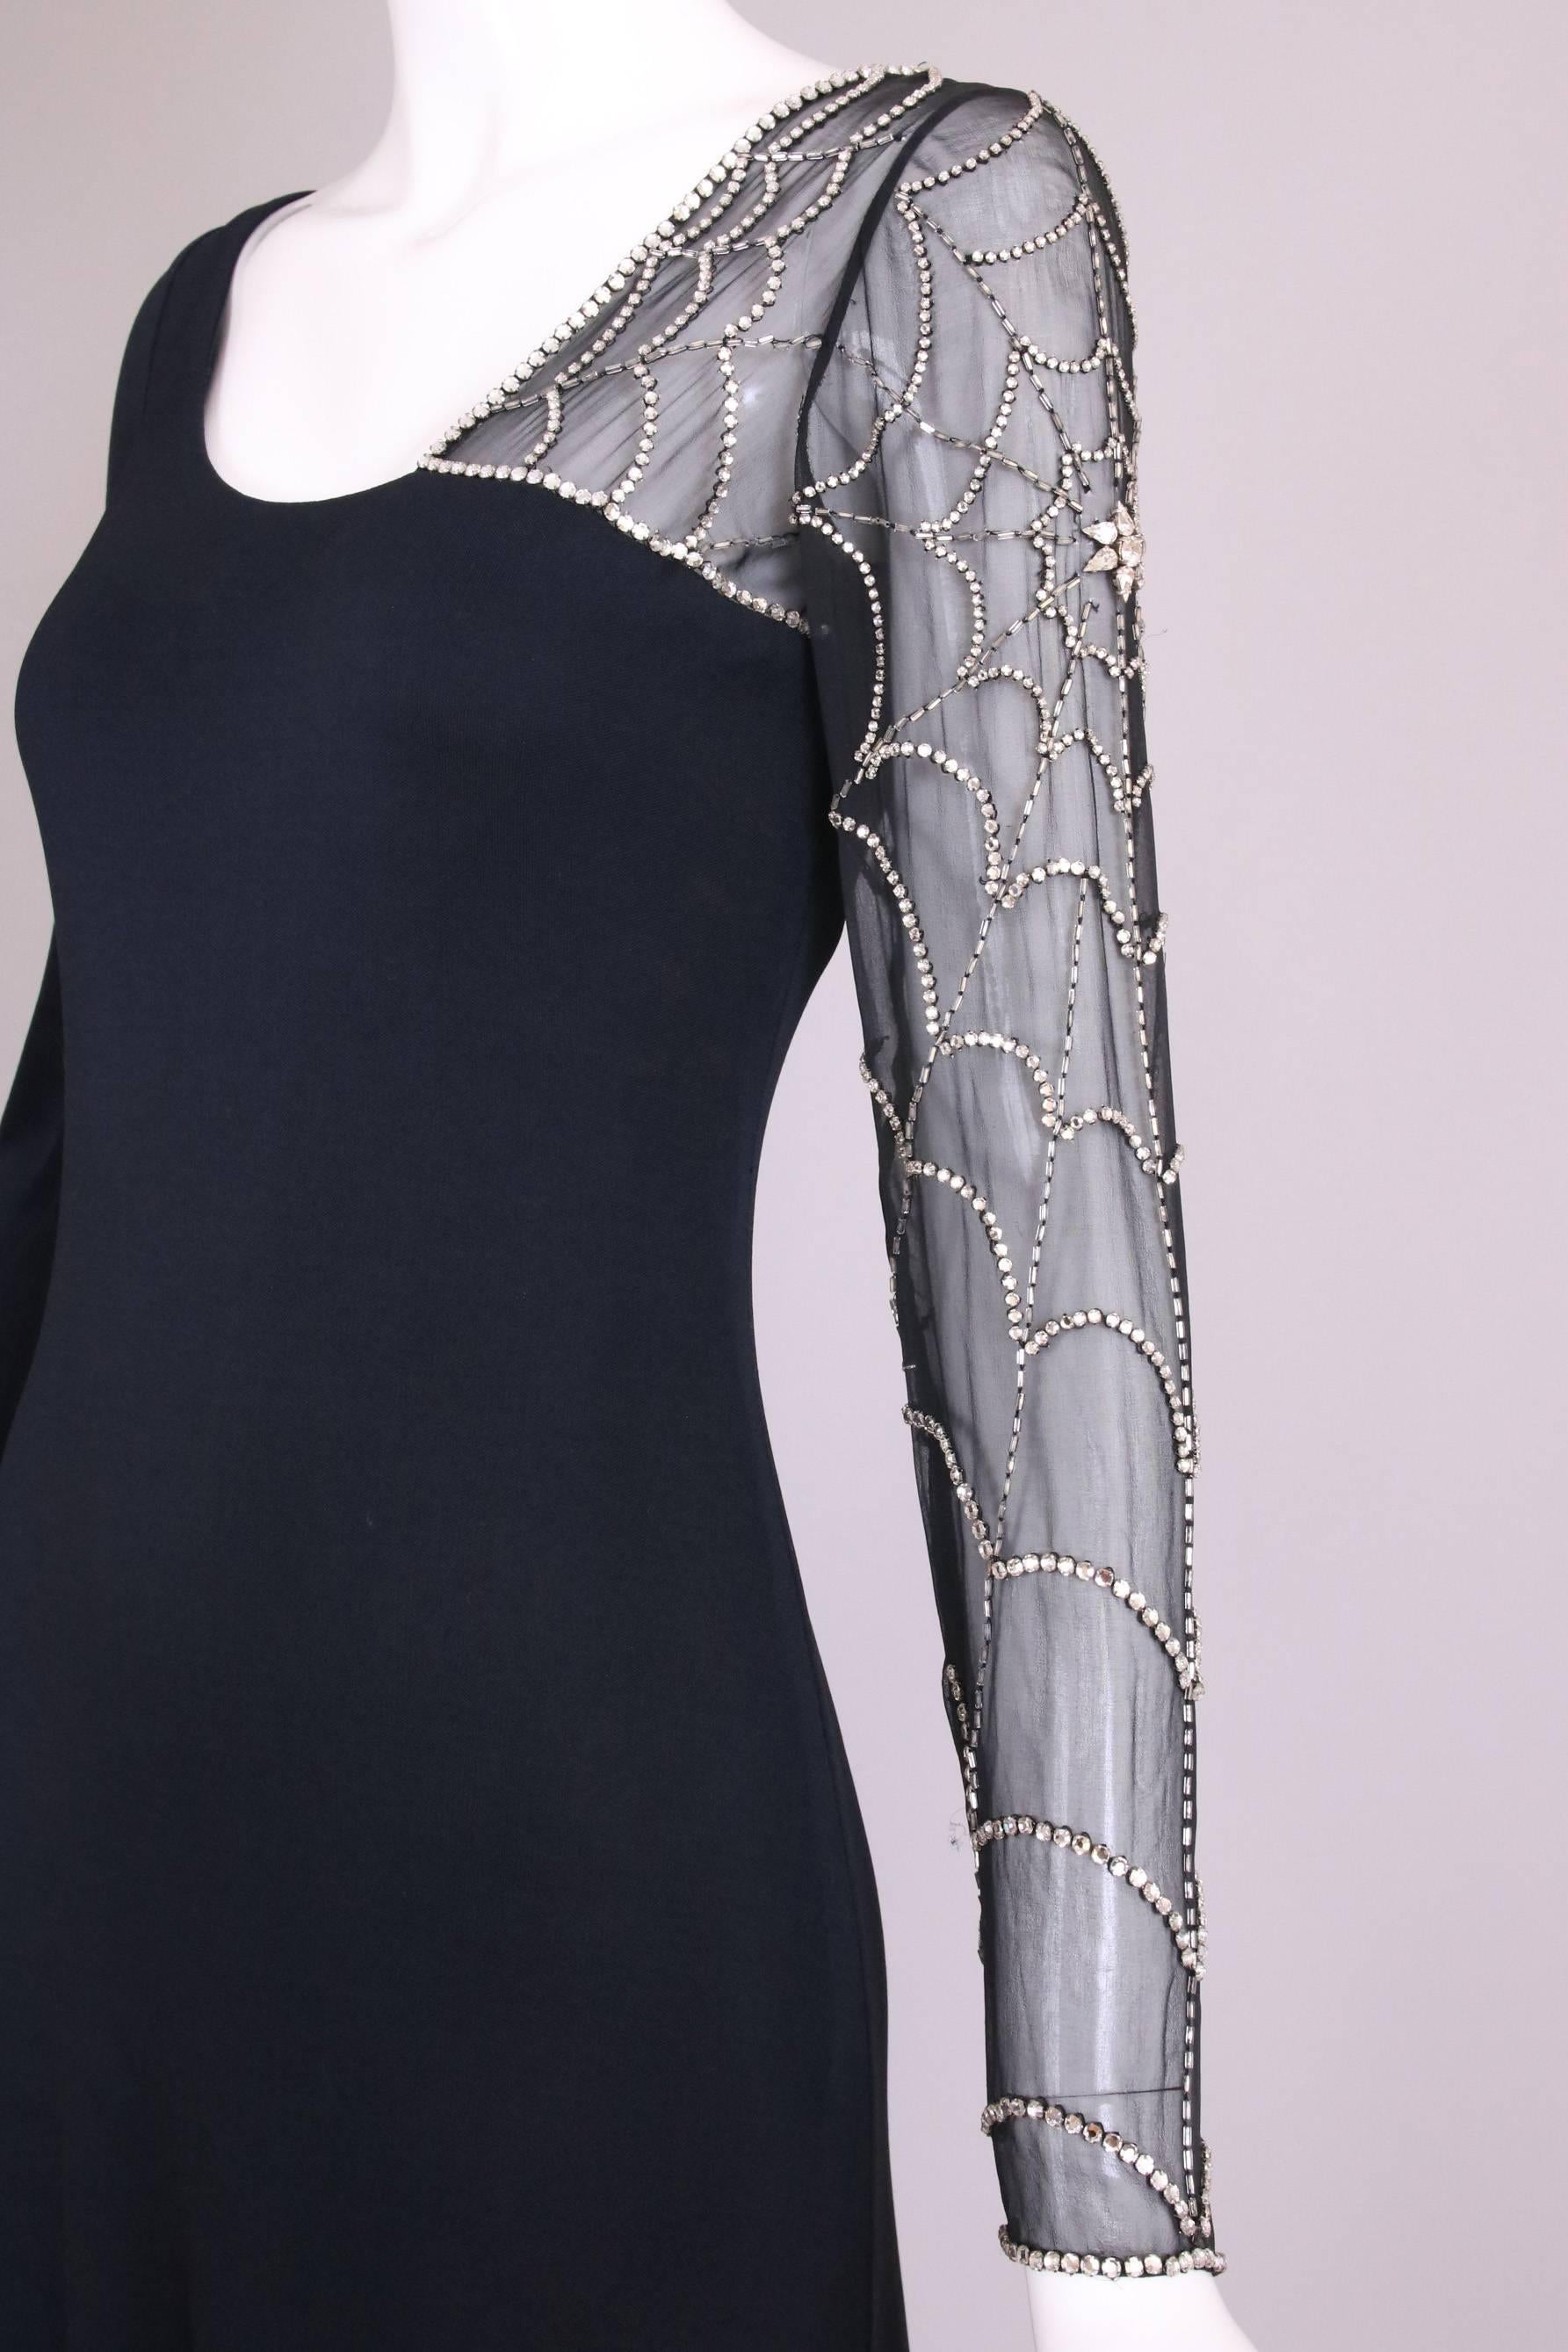 Mollie Parnis Black Silk Jersey Evening Dress Gown w/Beaded Spiderweb Sleeves 2